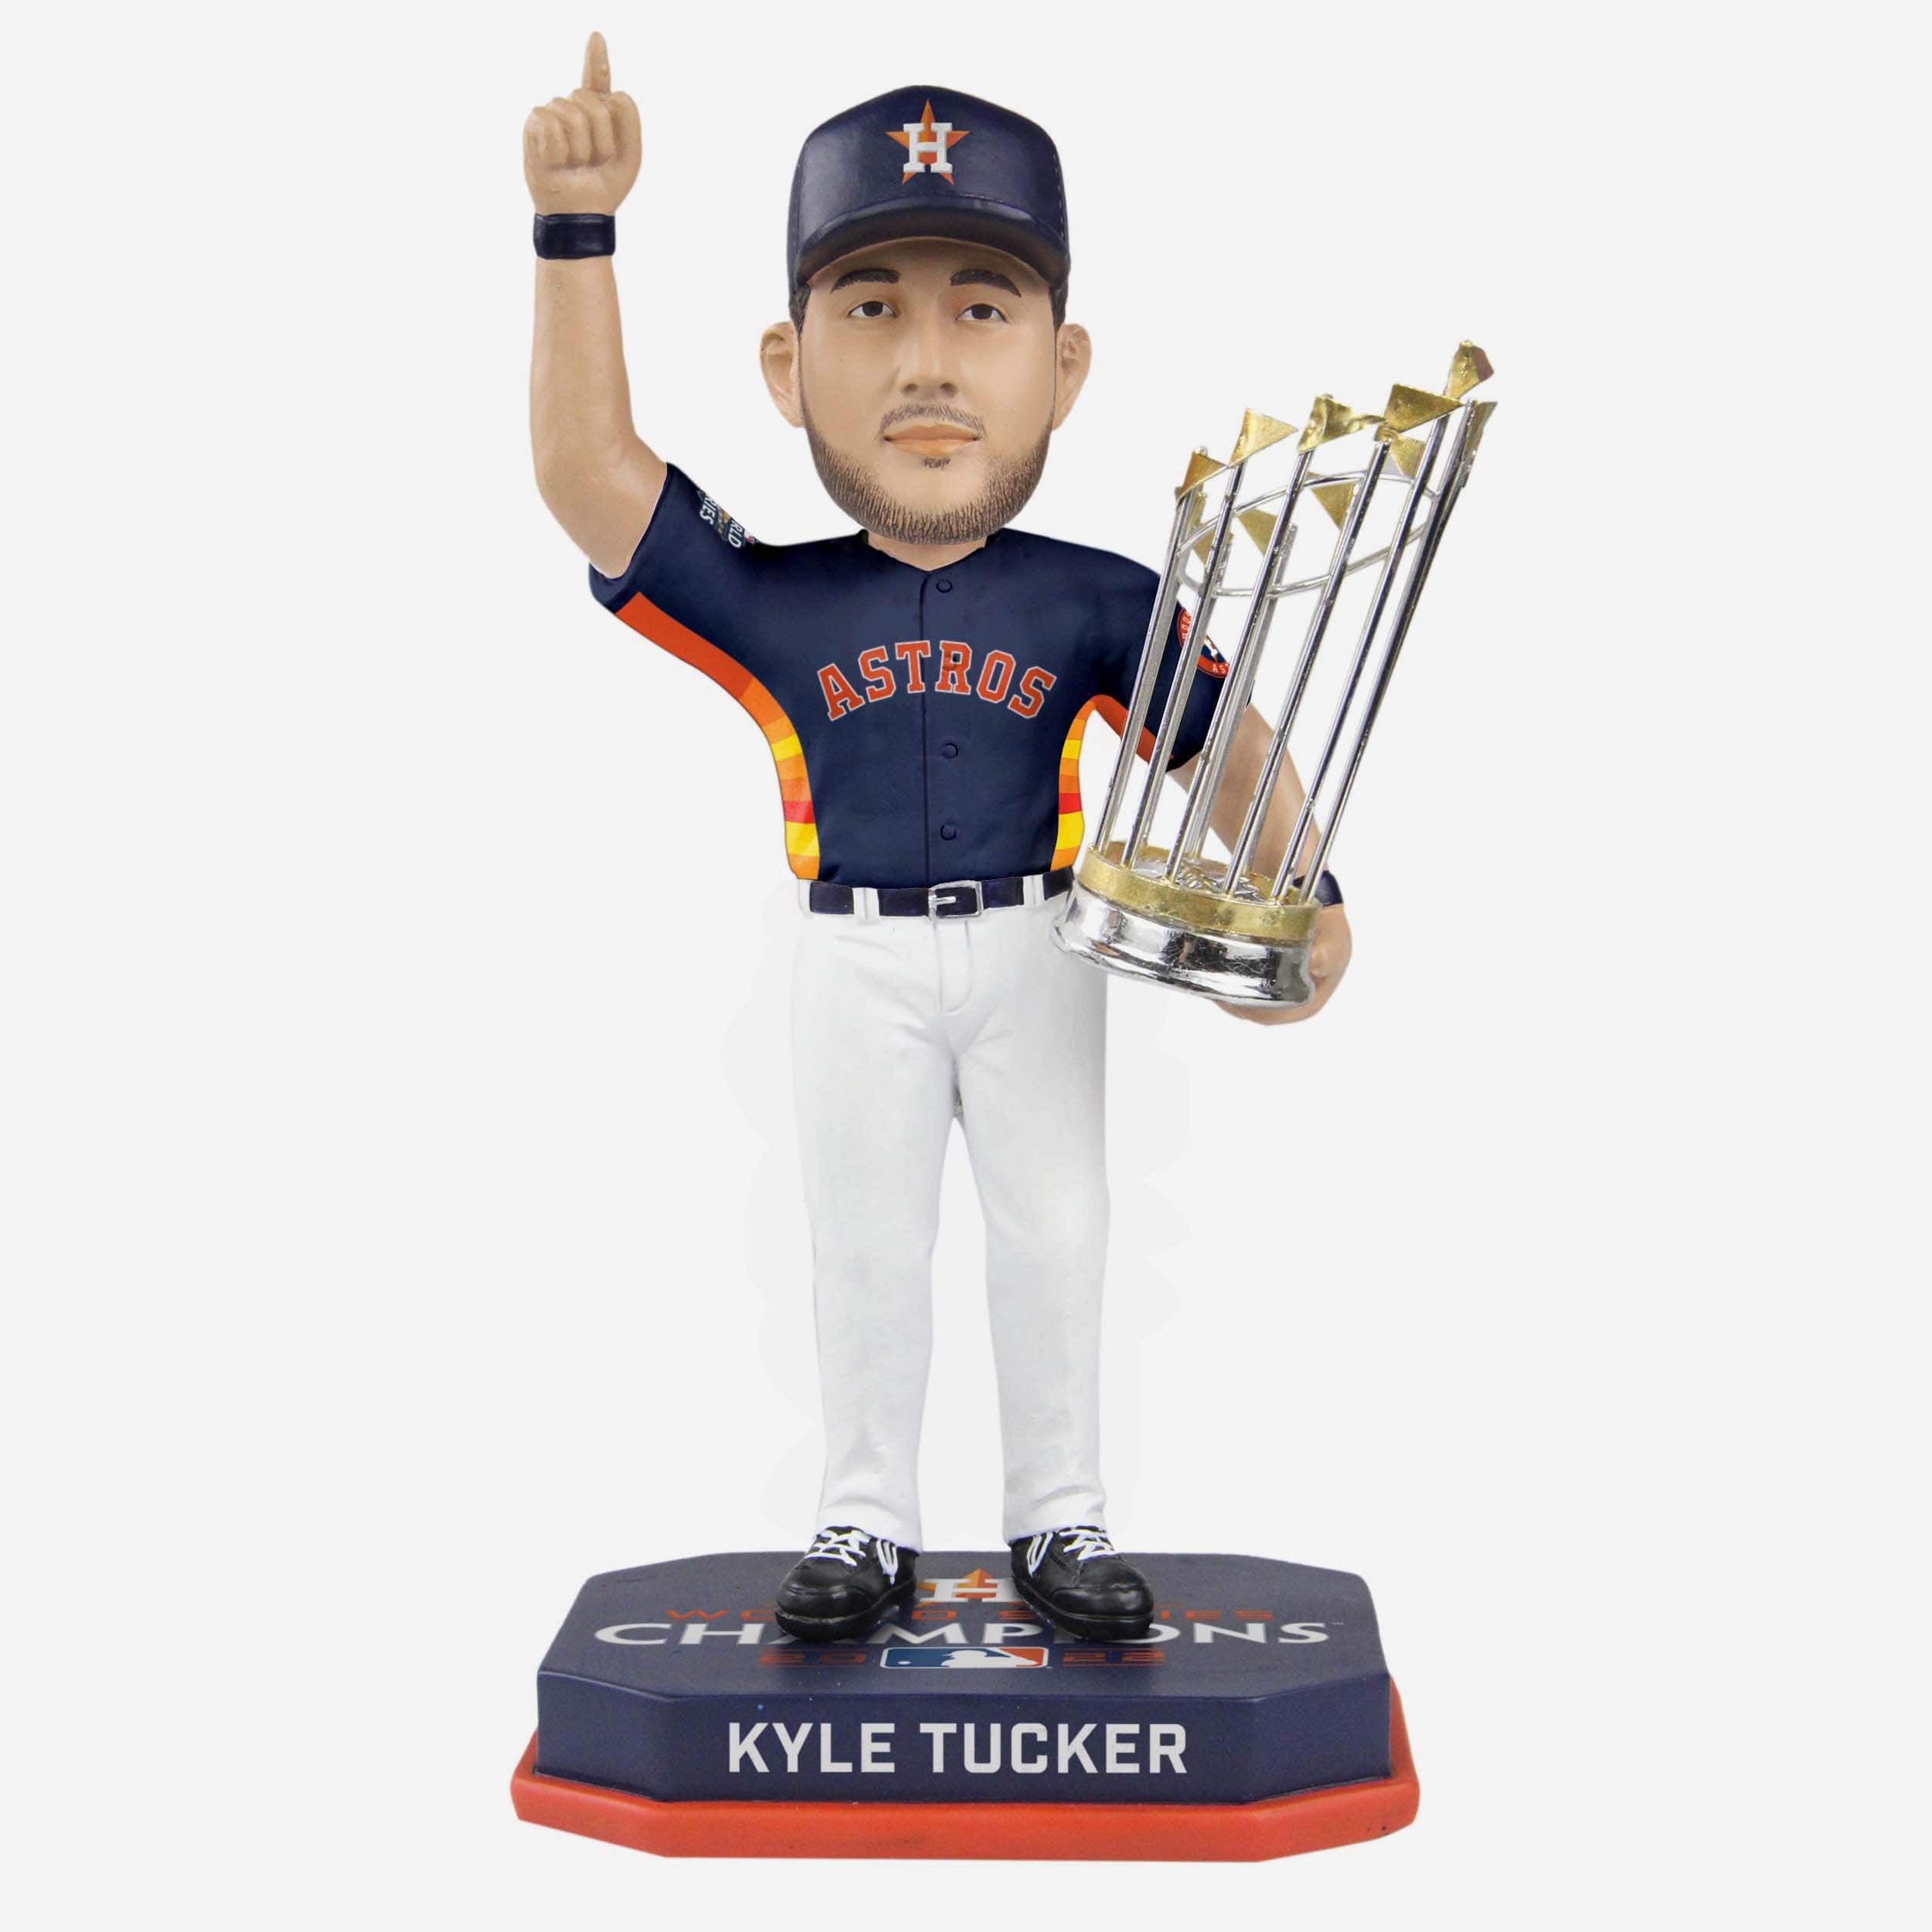 Kyle Tucker King Tuck Houston Astros Ornament Custom Name - Teespix - Store  Fashion LLC